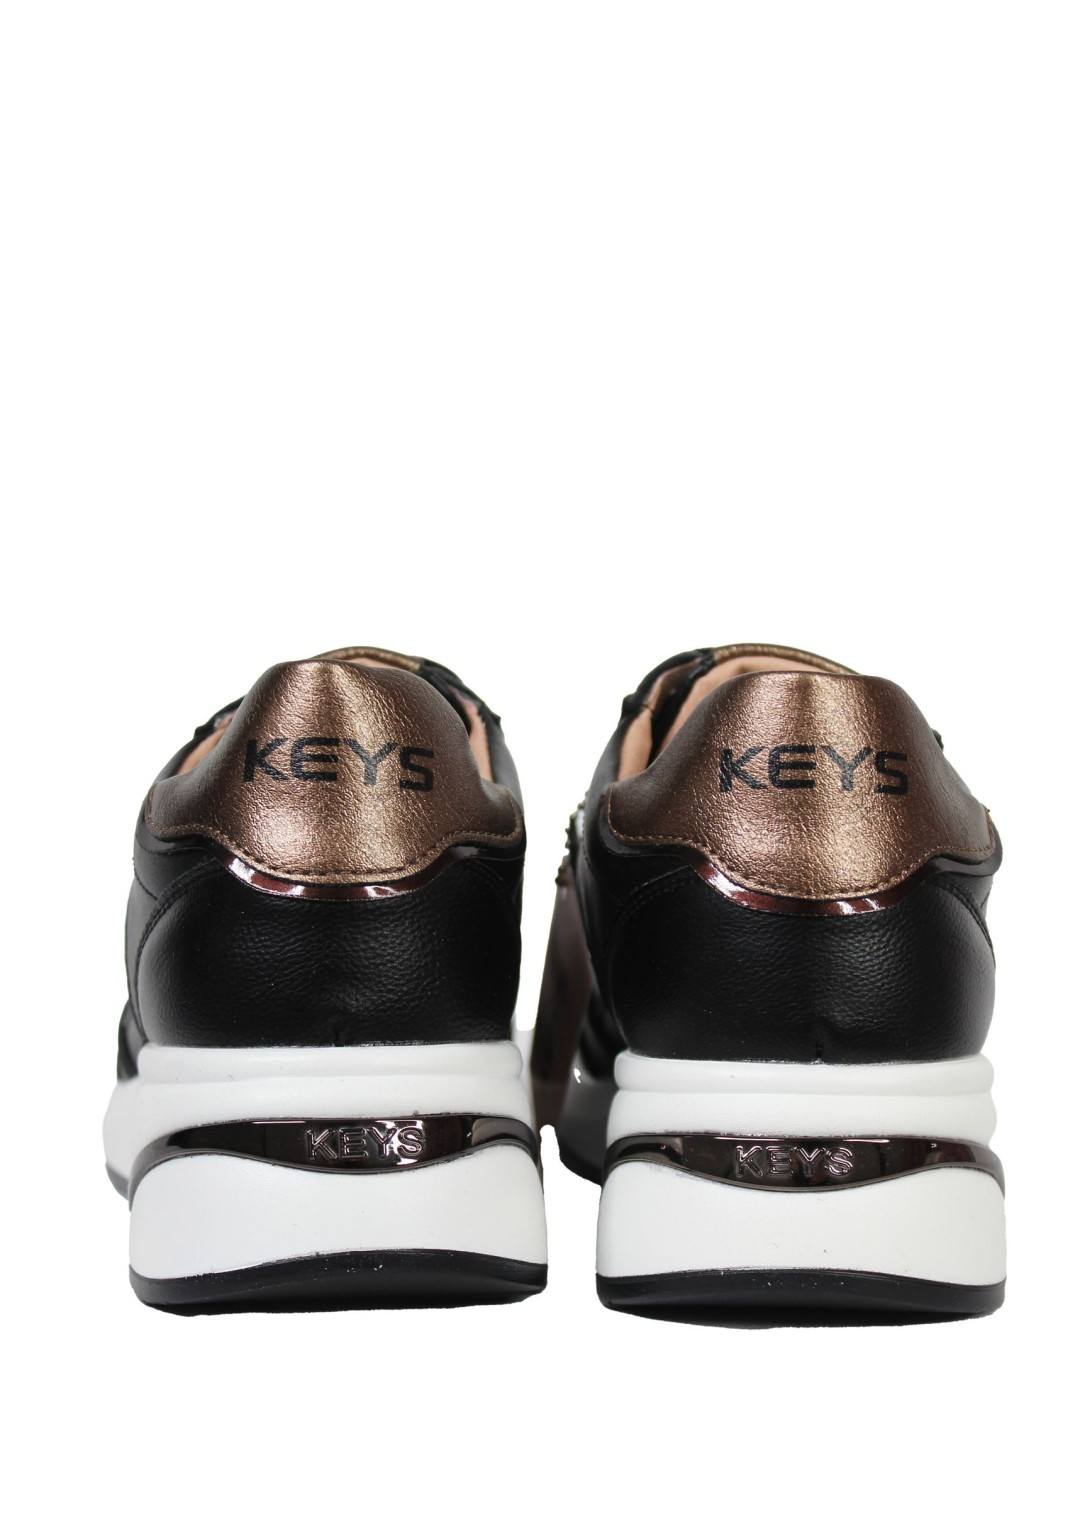 KEYS - Sneaker Logata - Donna - K-8350 N